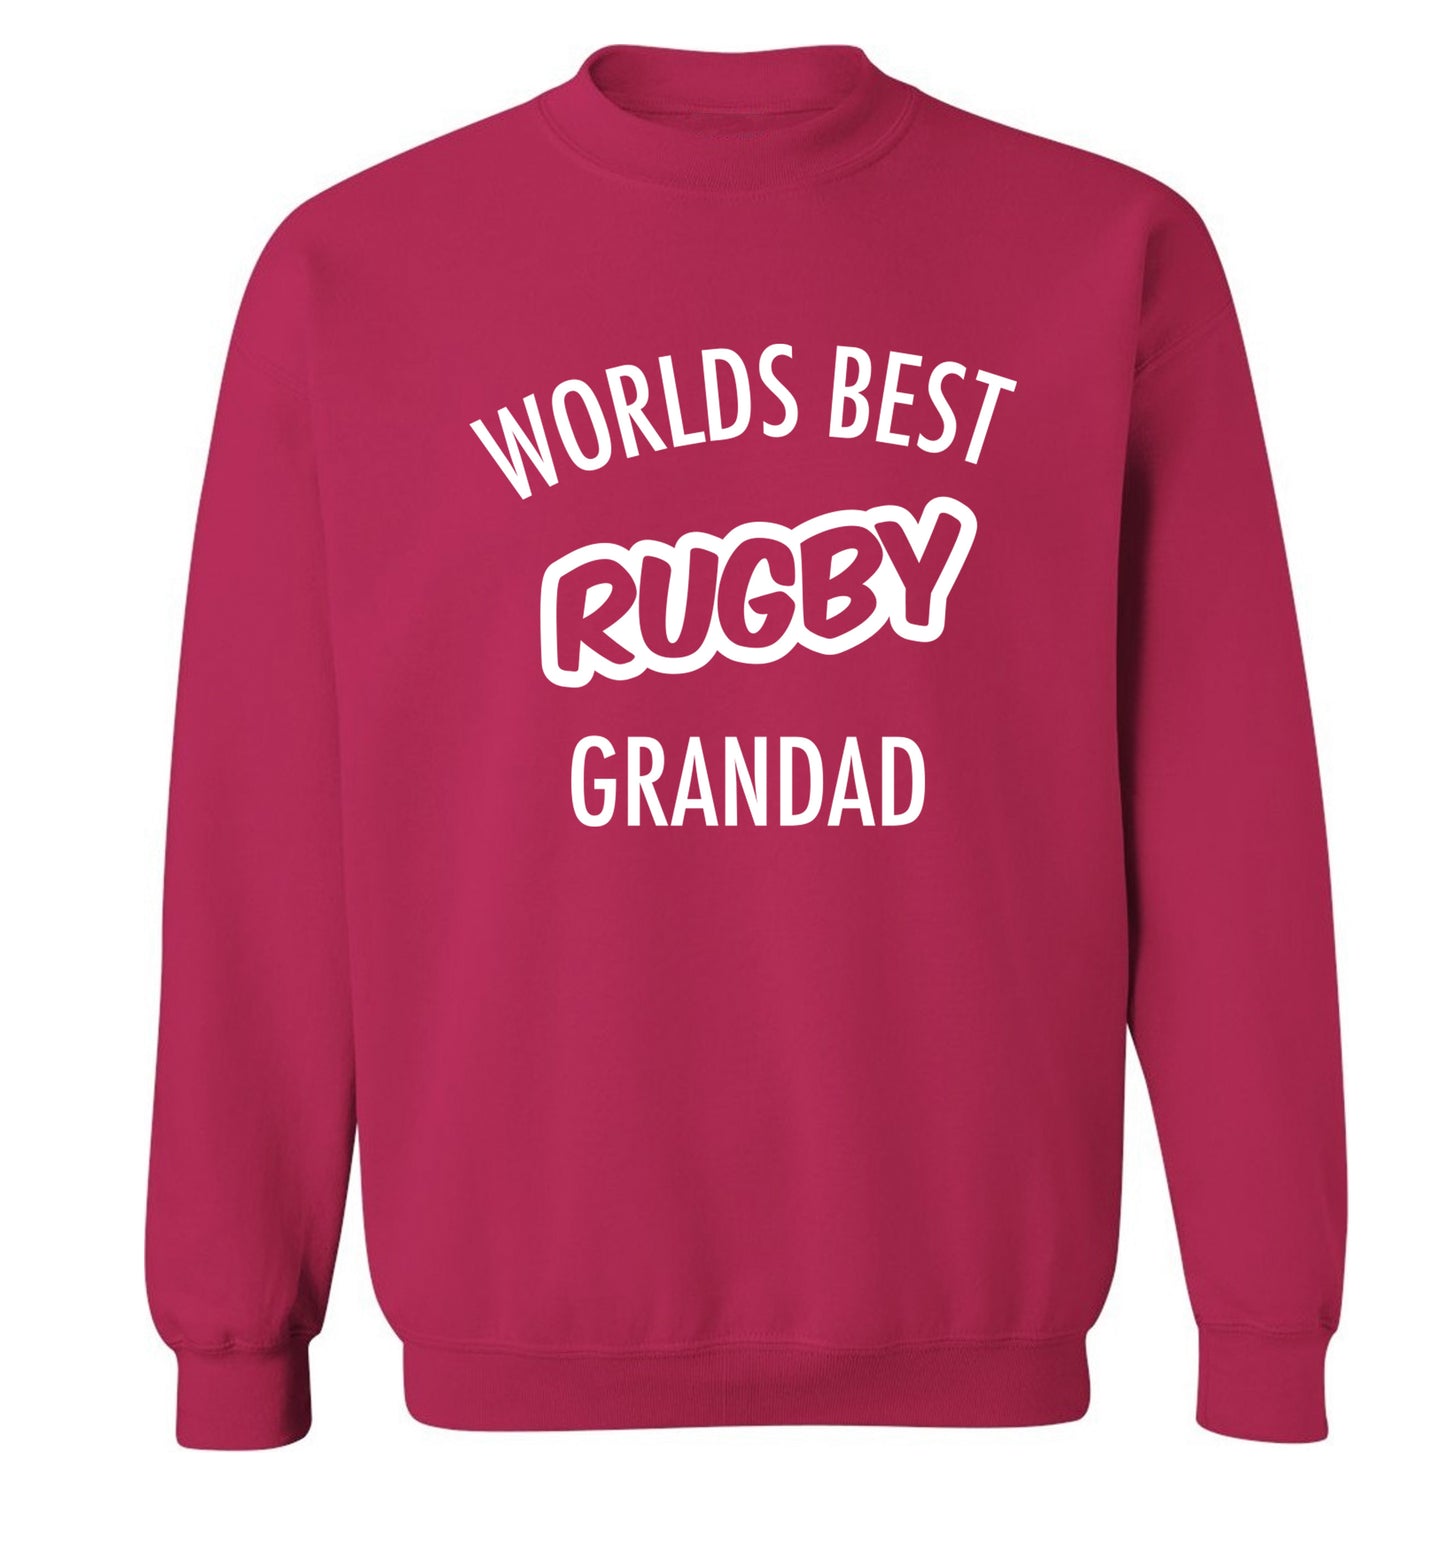 Worlds best rugby grandad Adult's unisex pink Sweater 2XL